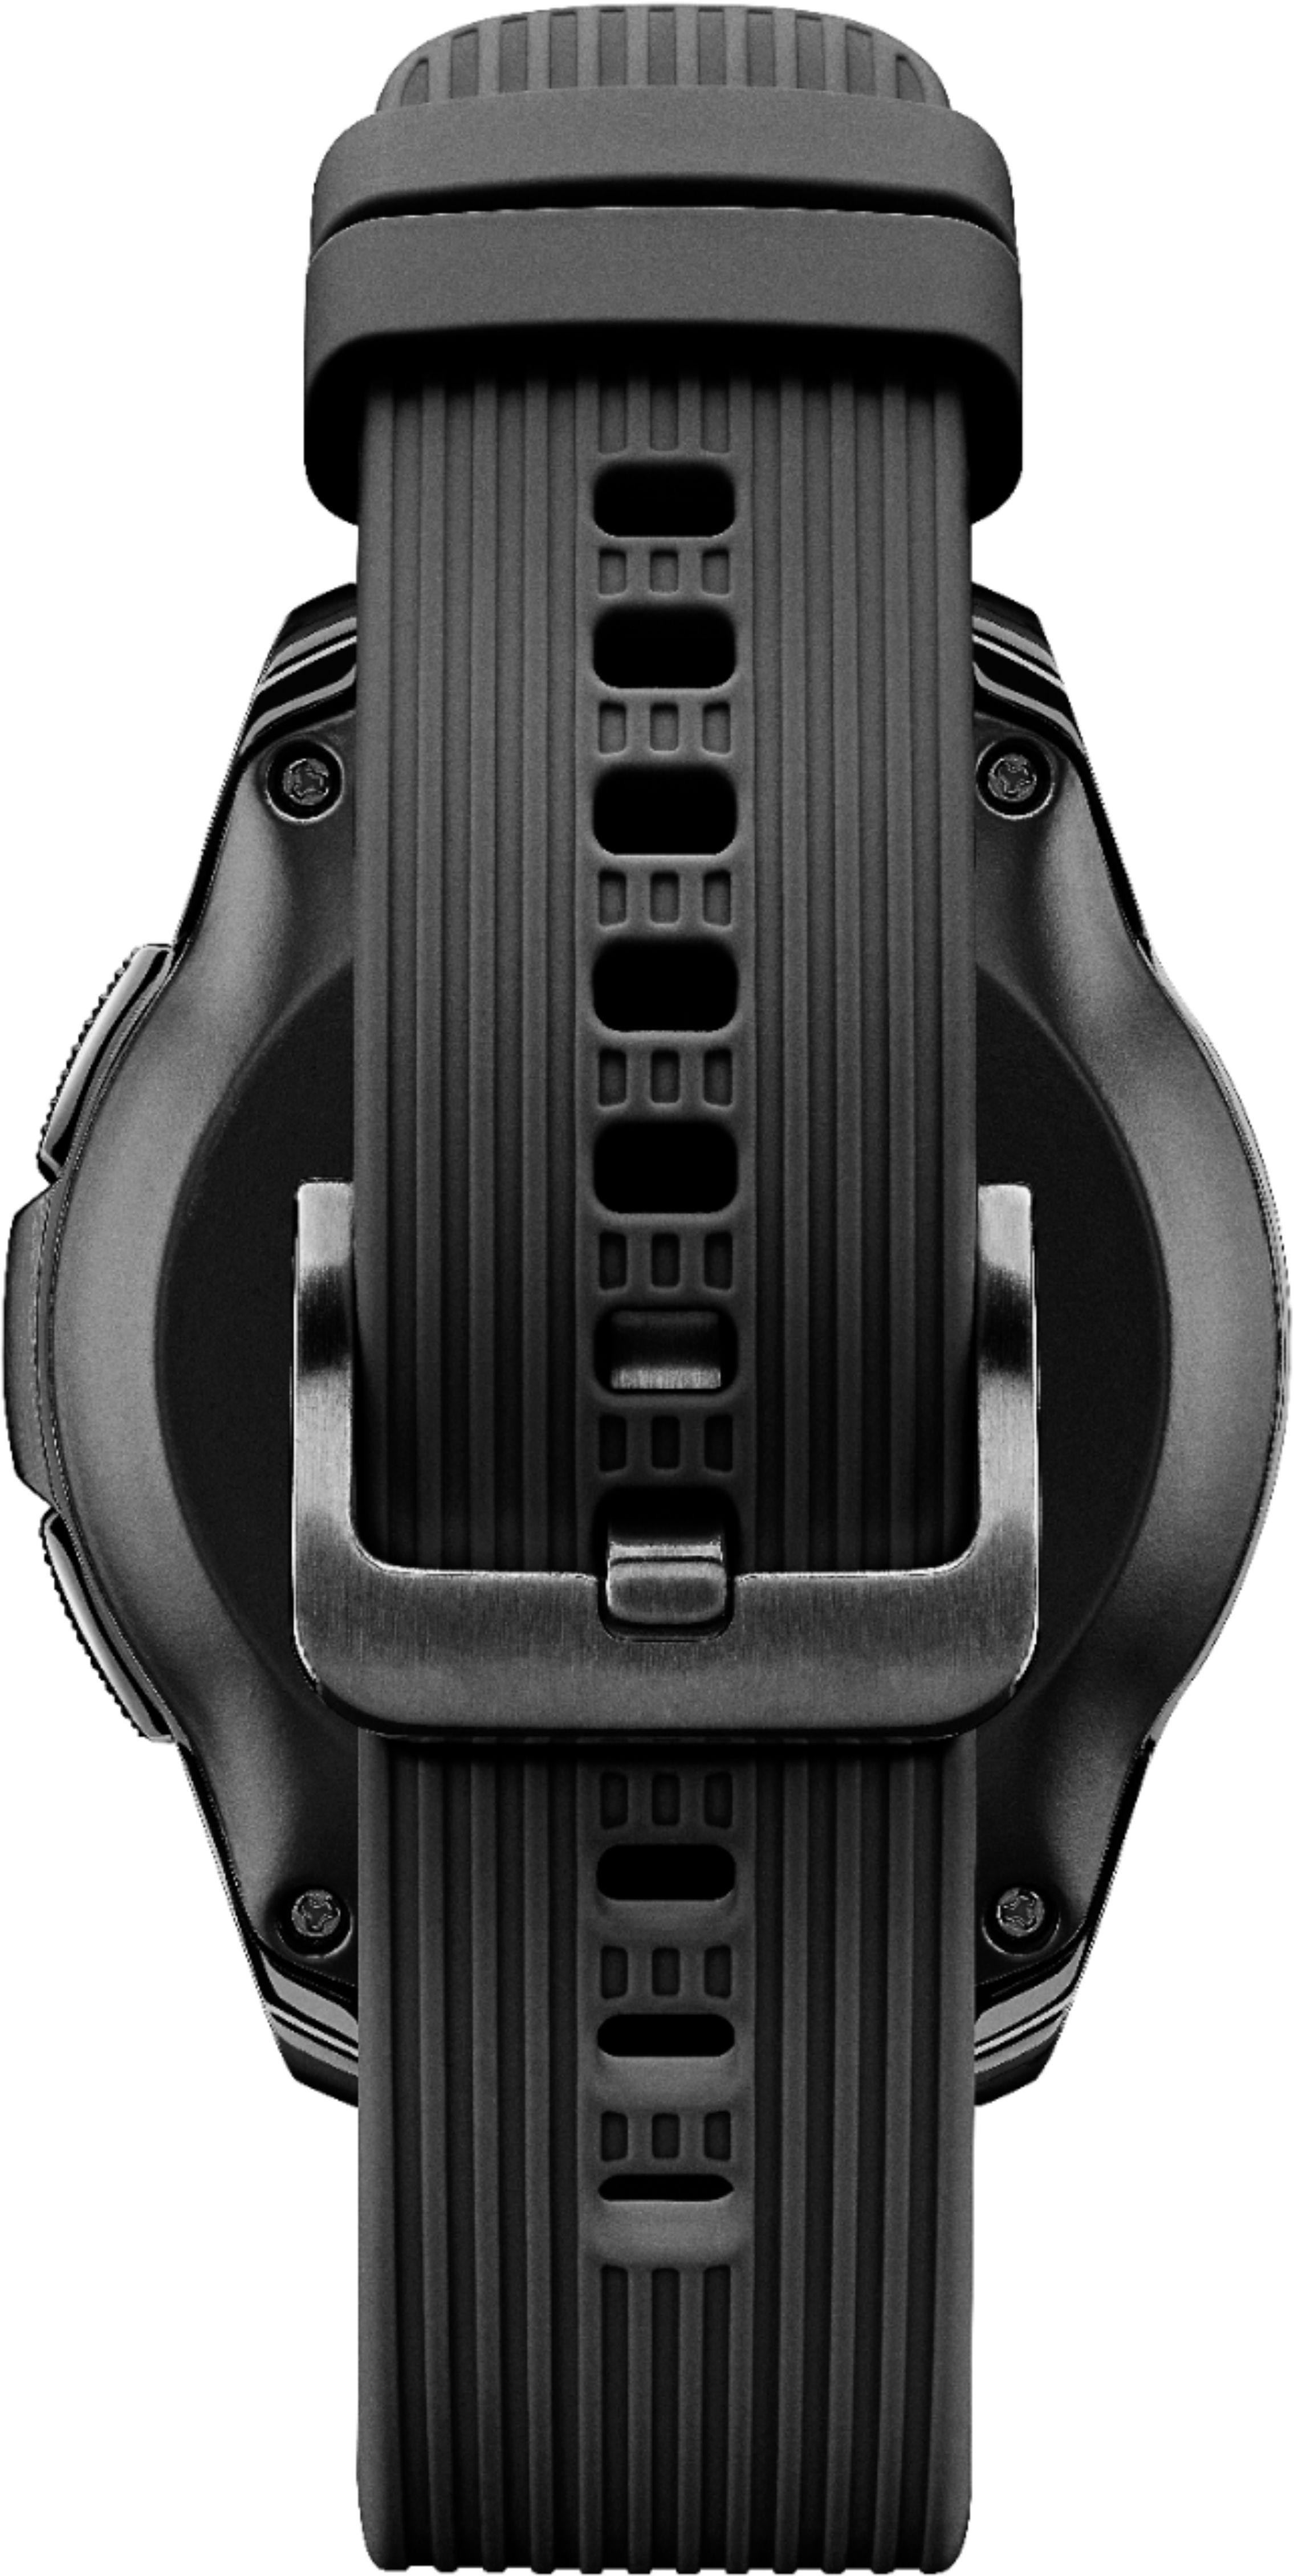 Back View: Samsung - Galaxy Watch Smartwatch 42mm Stainless Steel LTE (unlocked) - Midnight Black